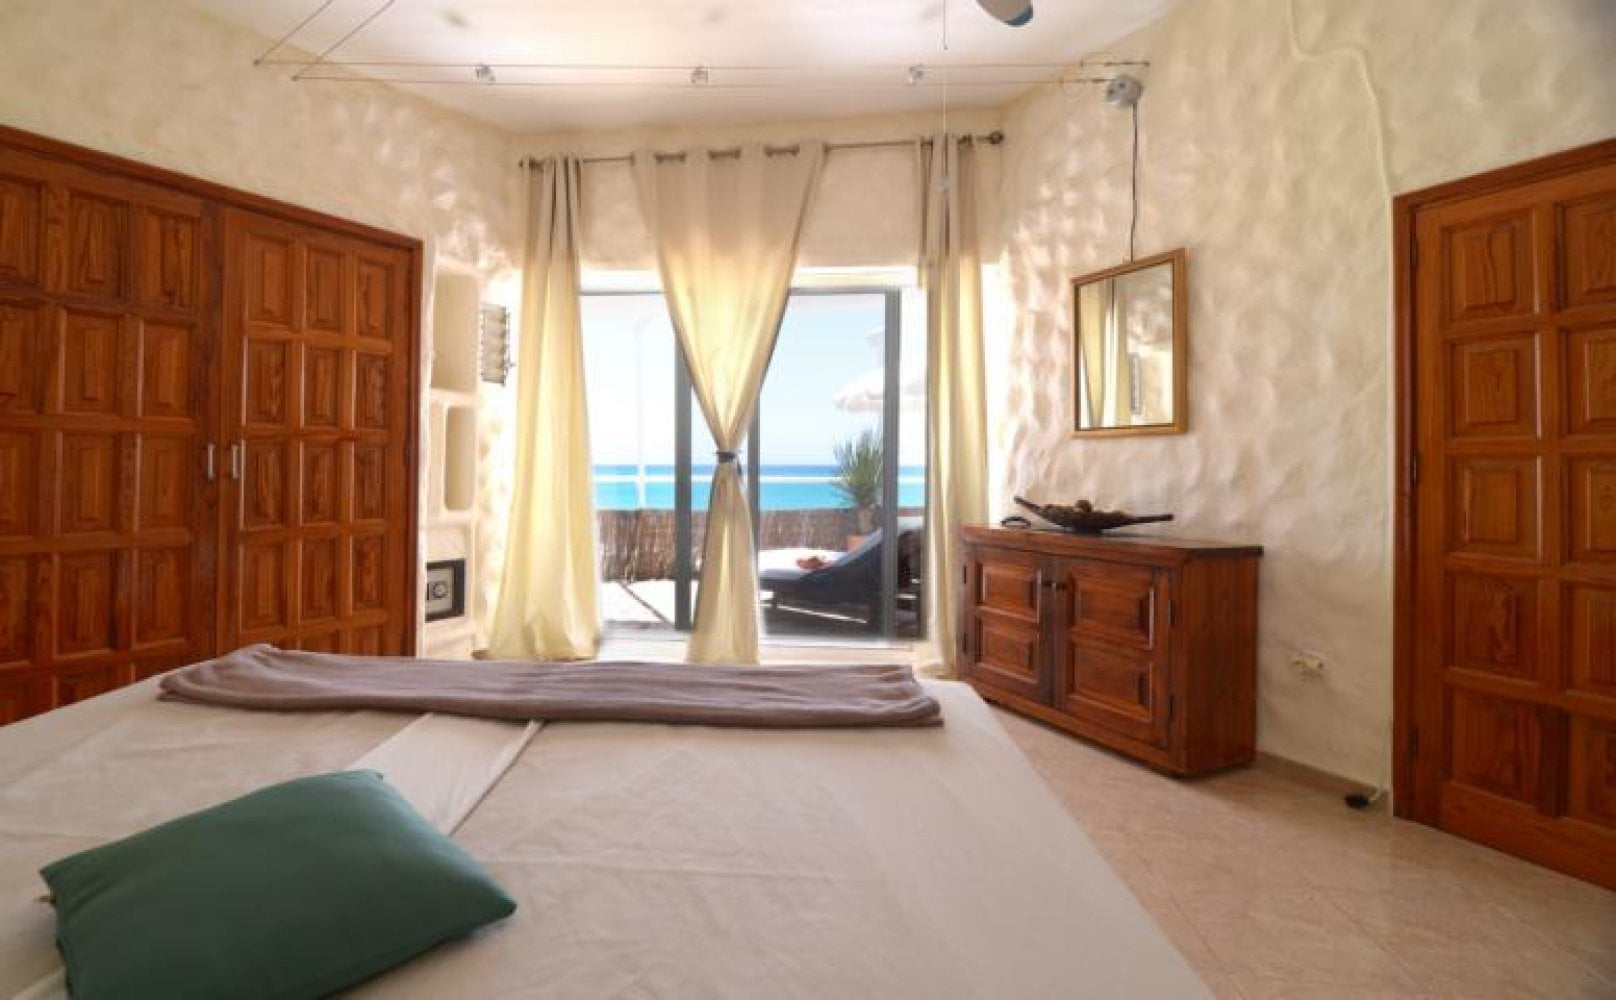 La Torre 2 - Expat beach house in Fuerteventura